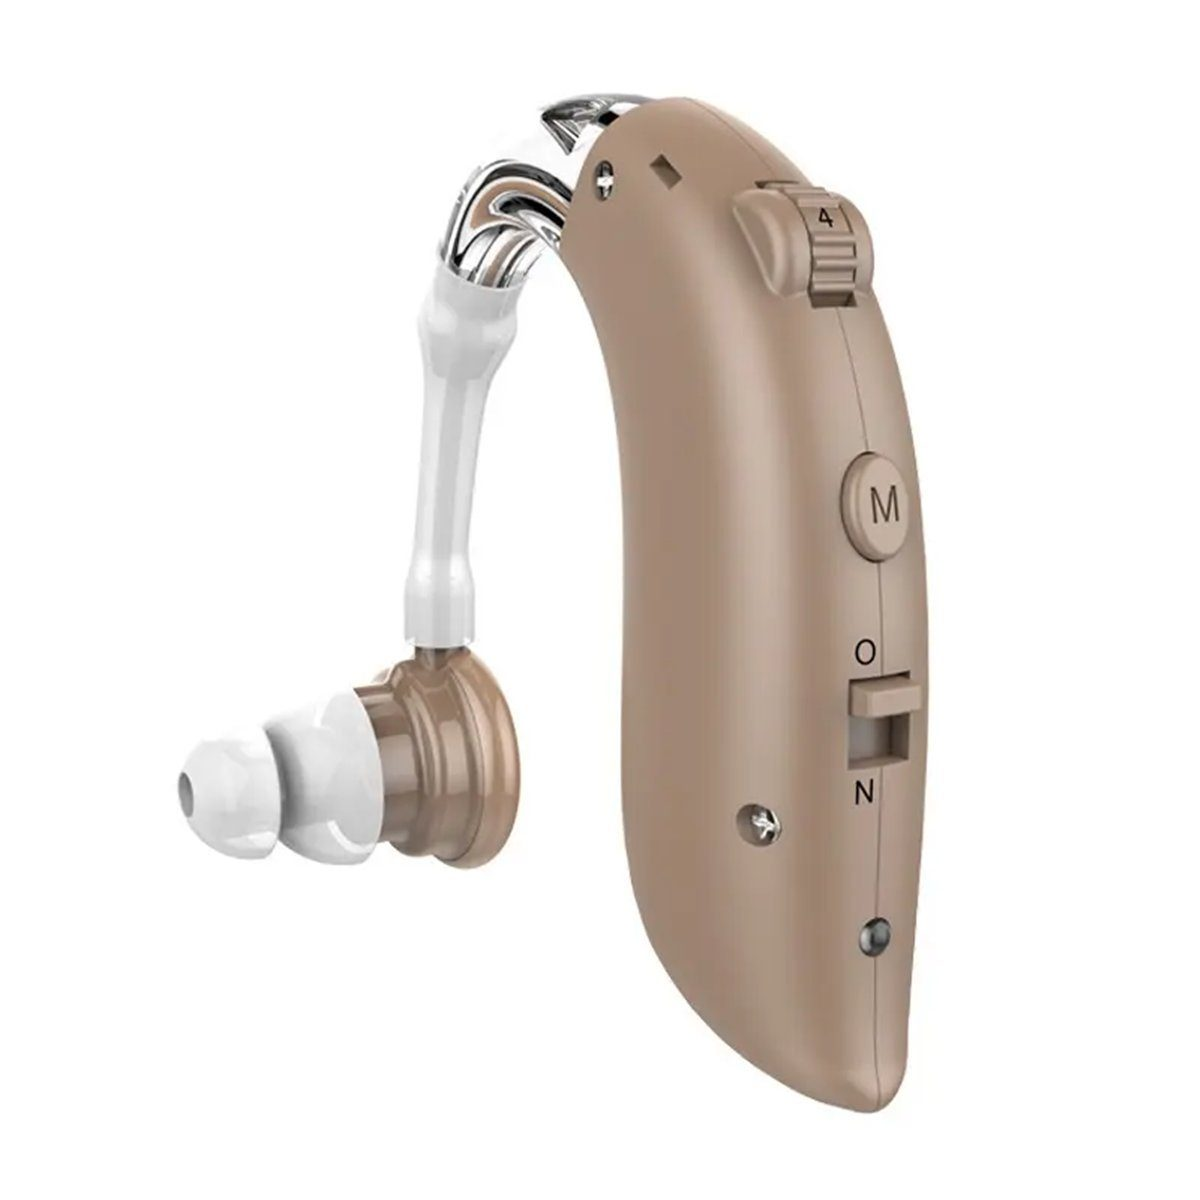 SYNTEK Hörgerät,Hörverstärker-Smart Hörverstärker mit Hörgerät Anpassung Geräuschreduzierung automatischer und